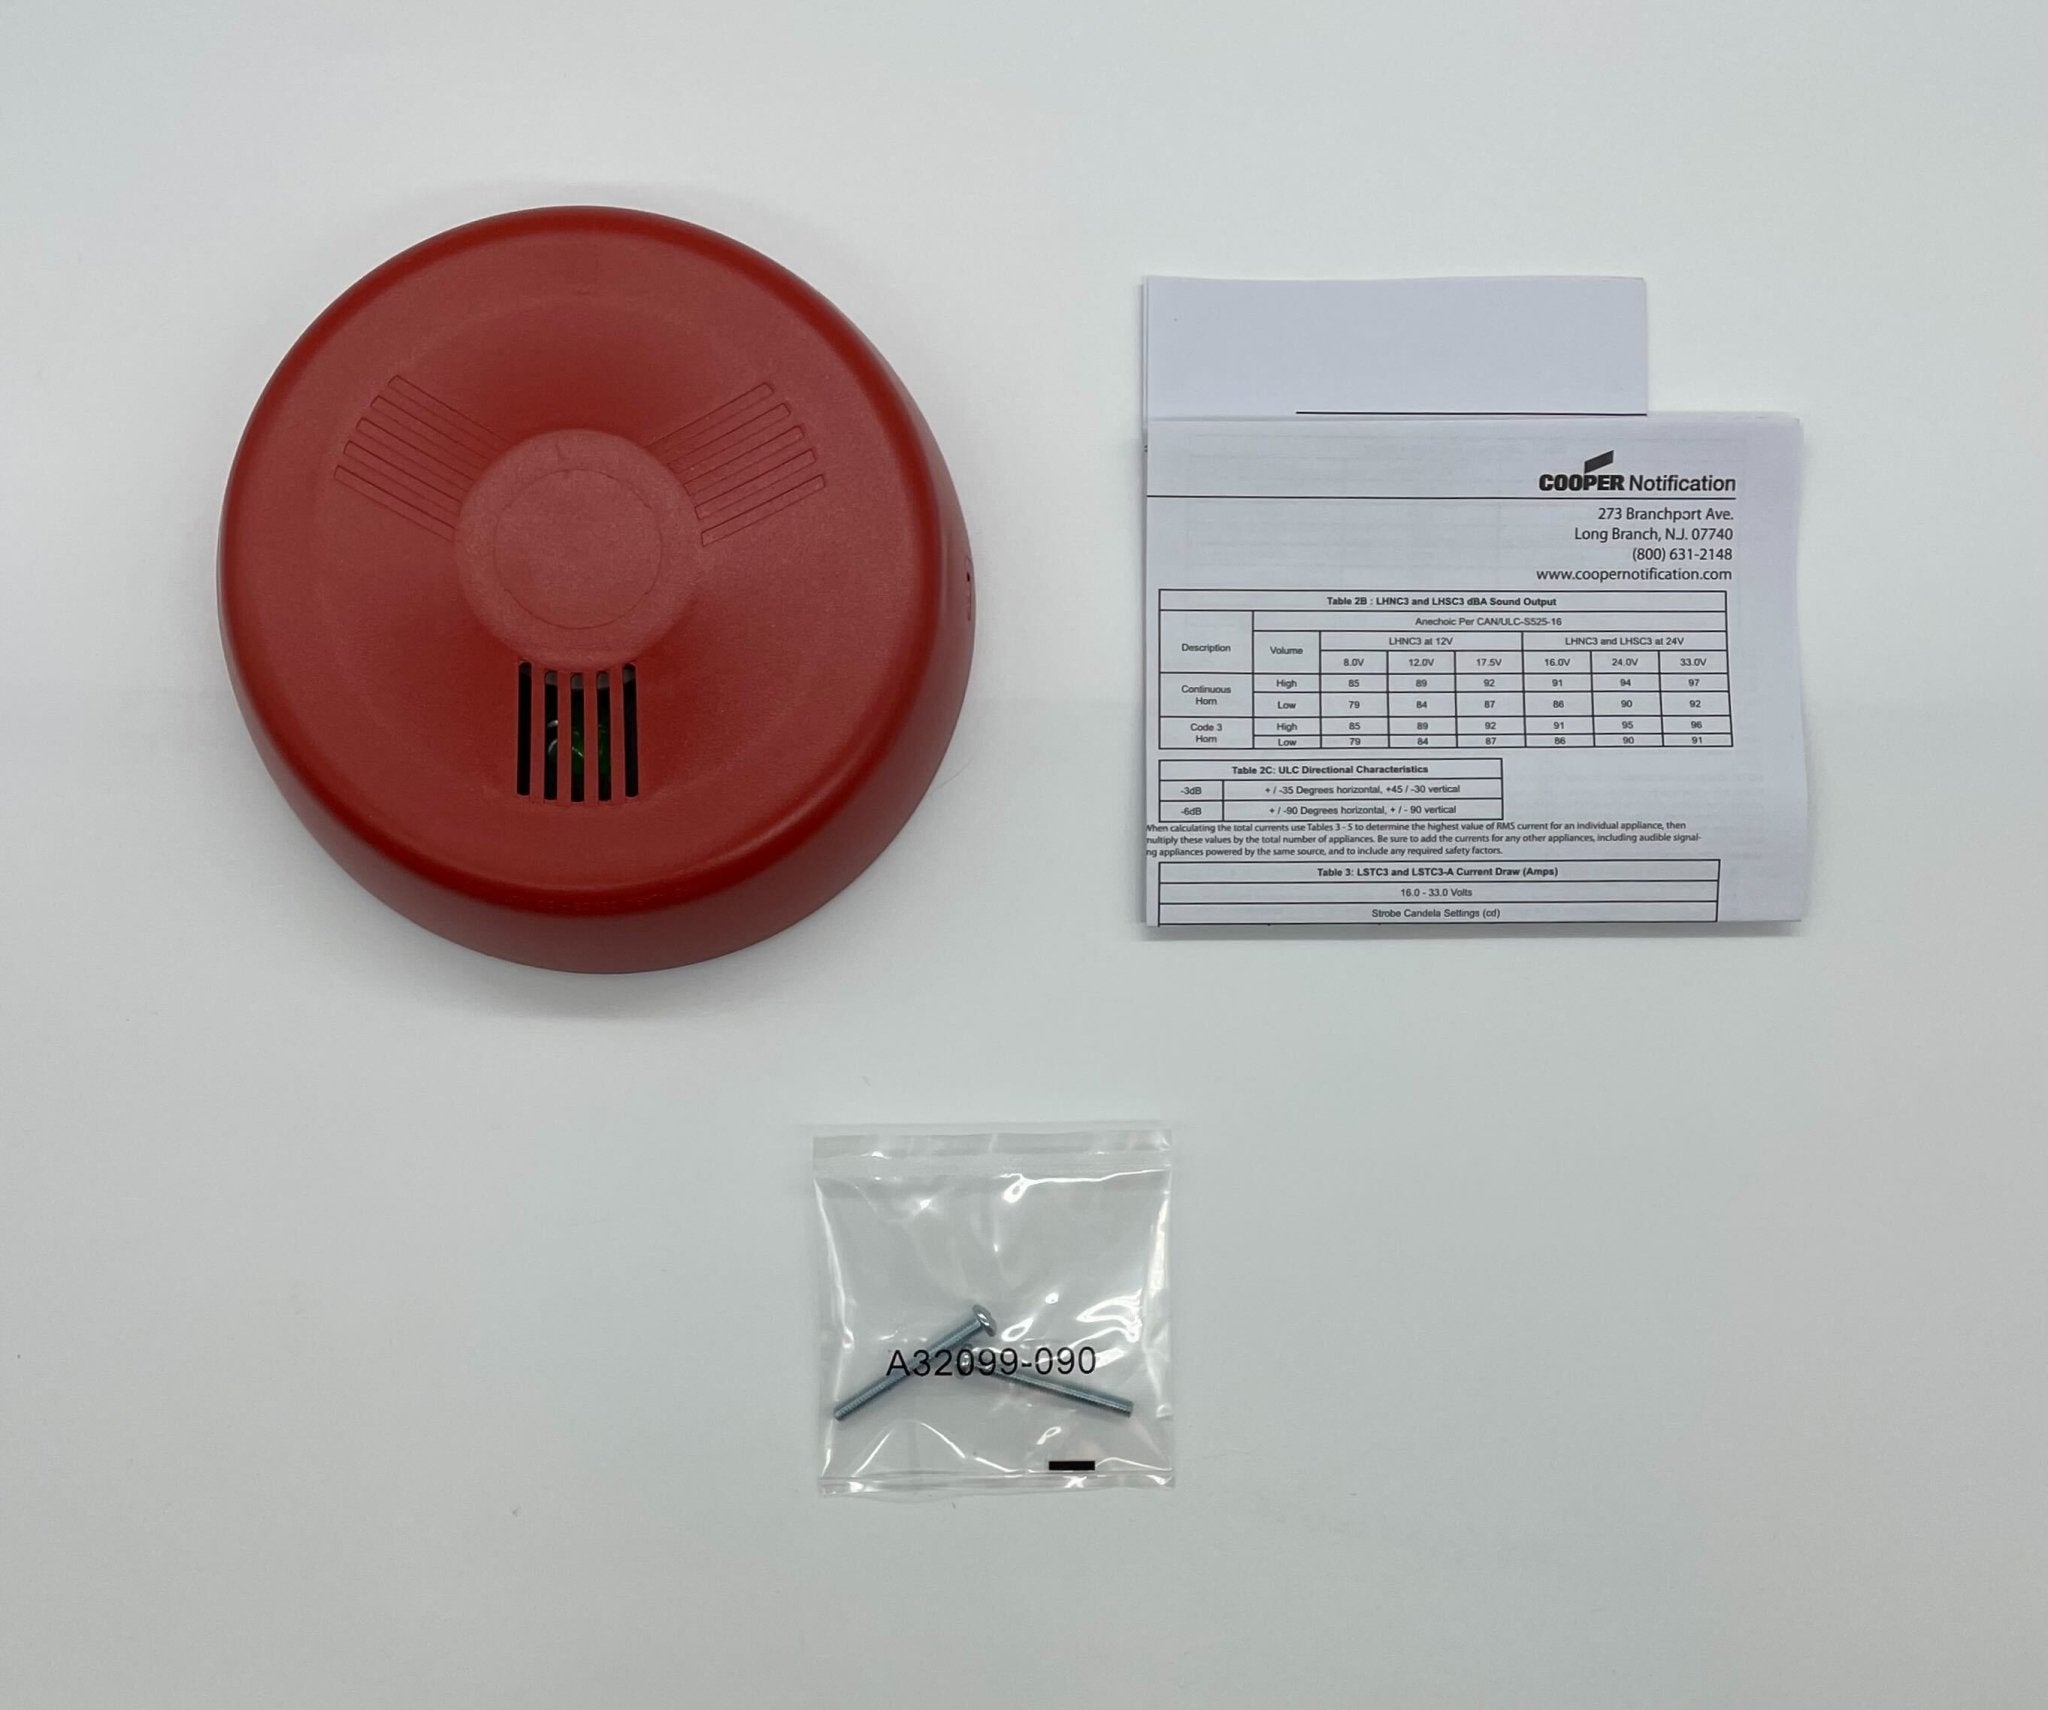 Wheelock LHNRC3 - The Fire Alarm Supplier